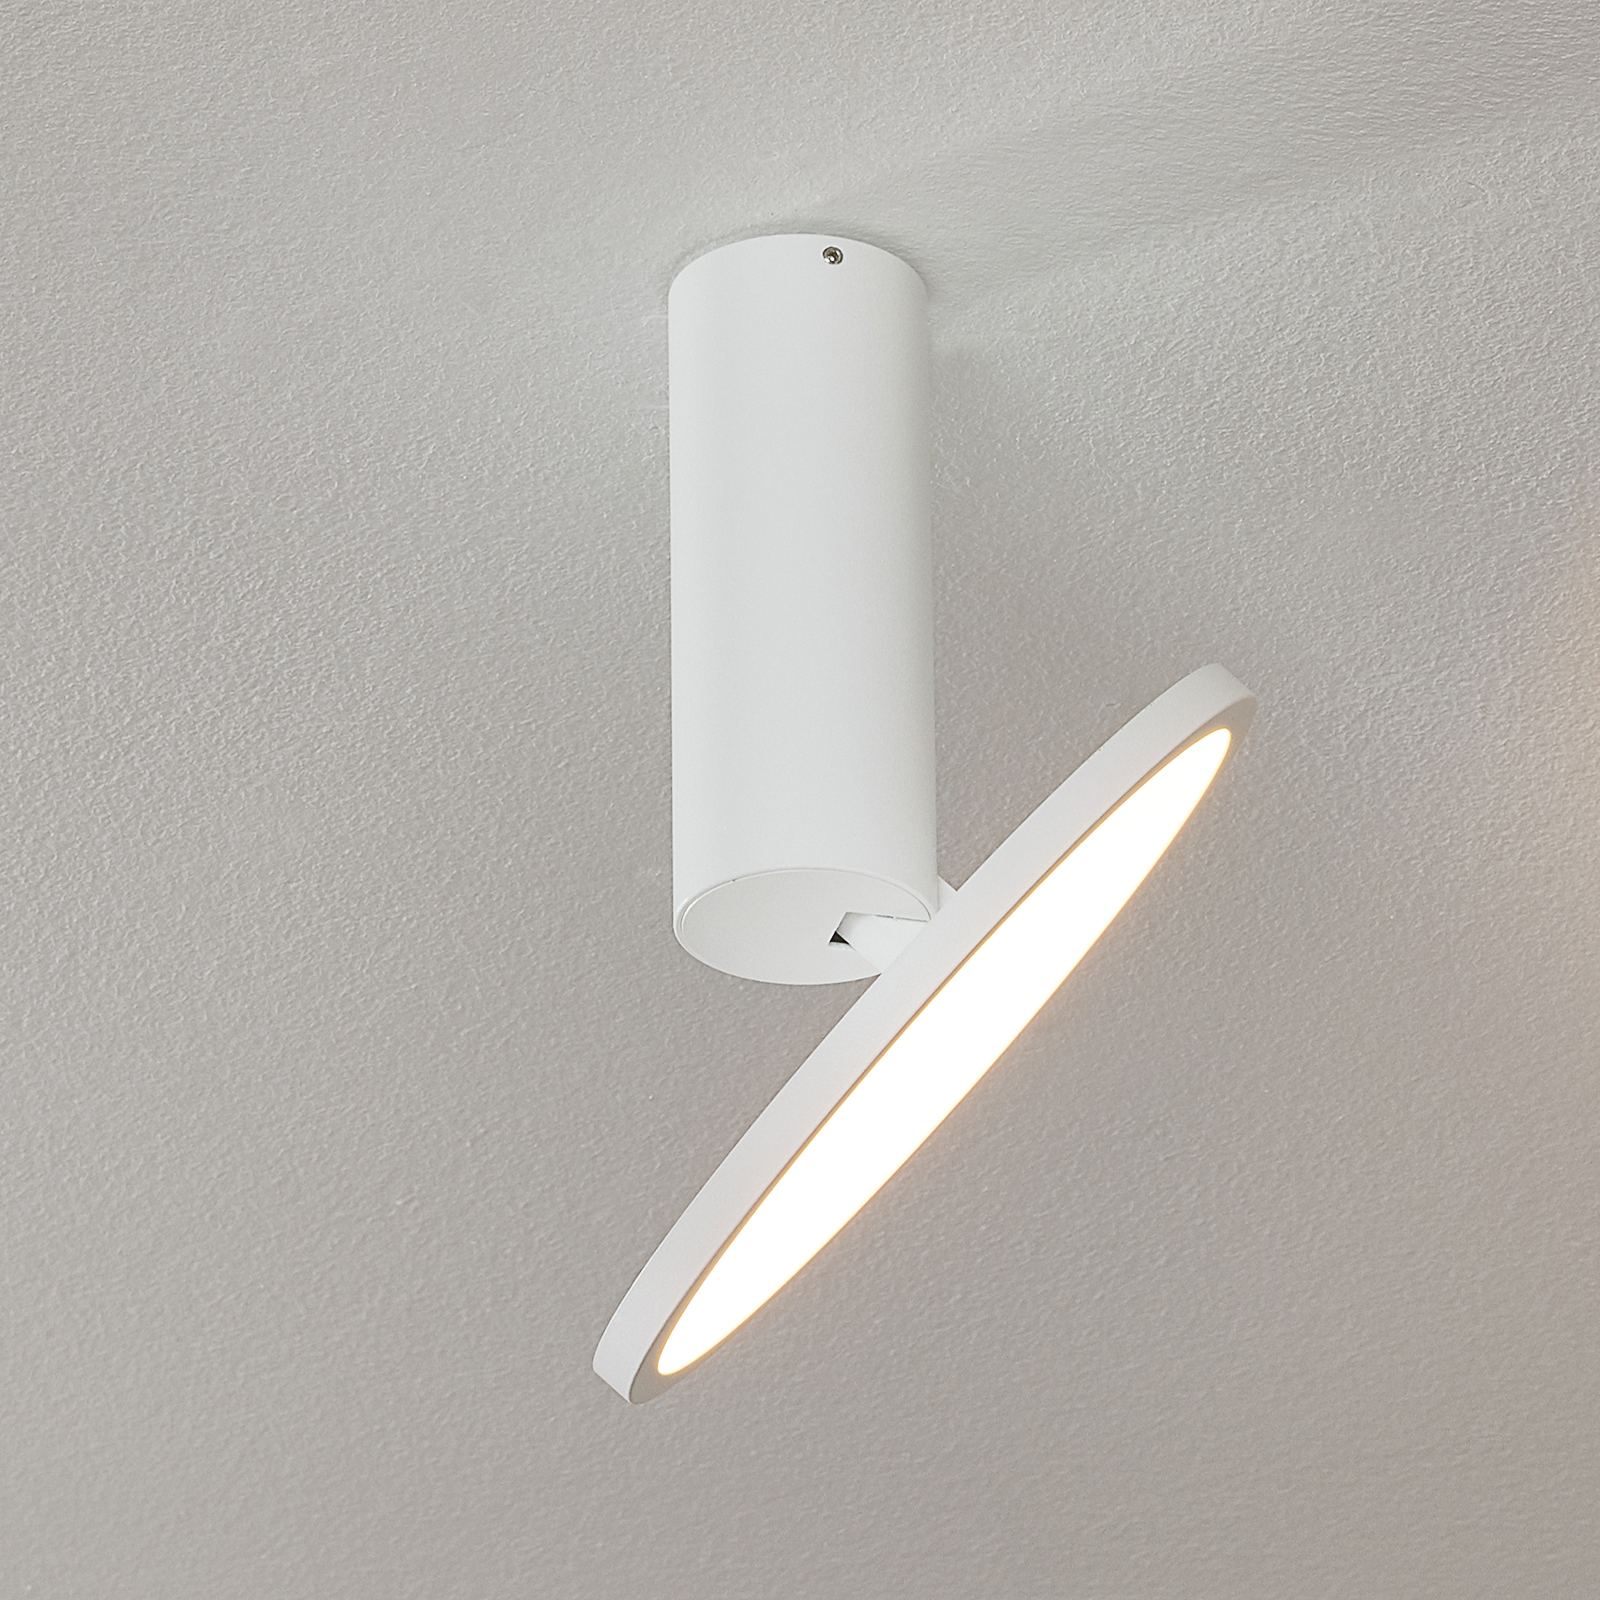 Lampa sufitowa LED Morgan, ruchoma, biała